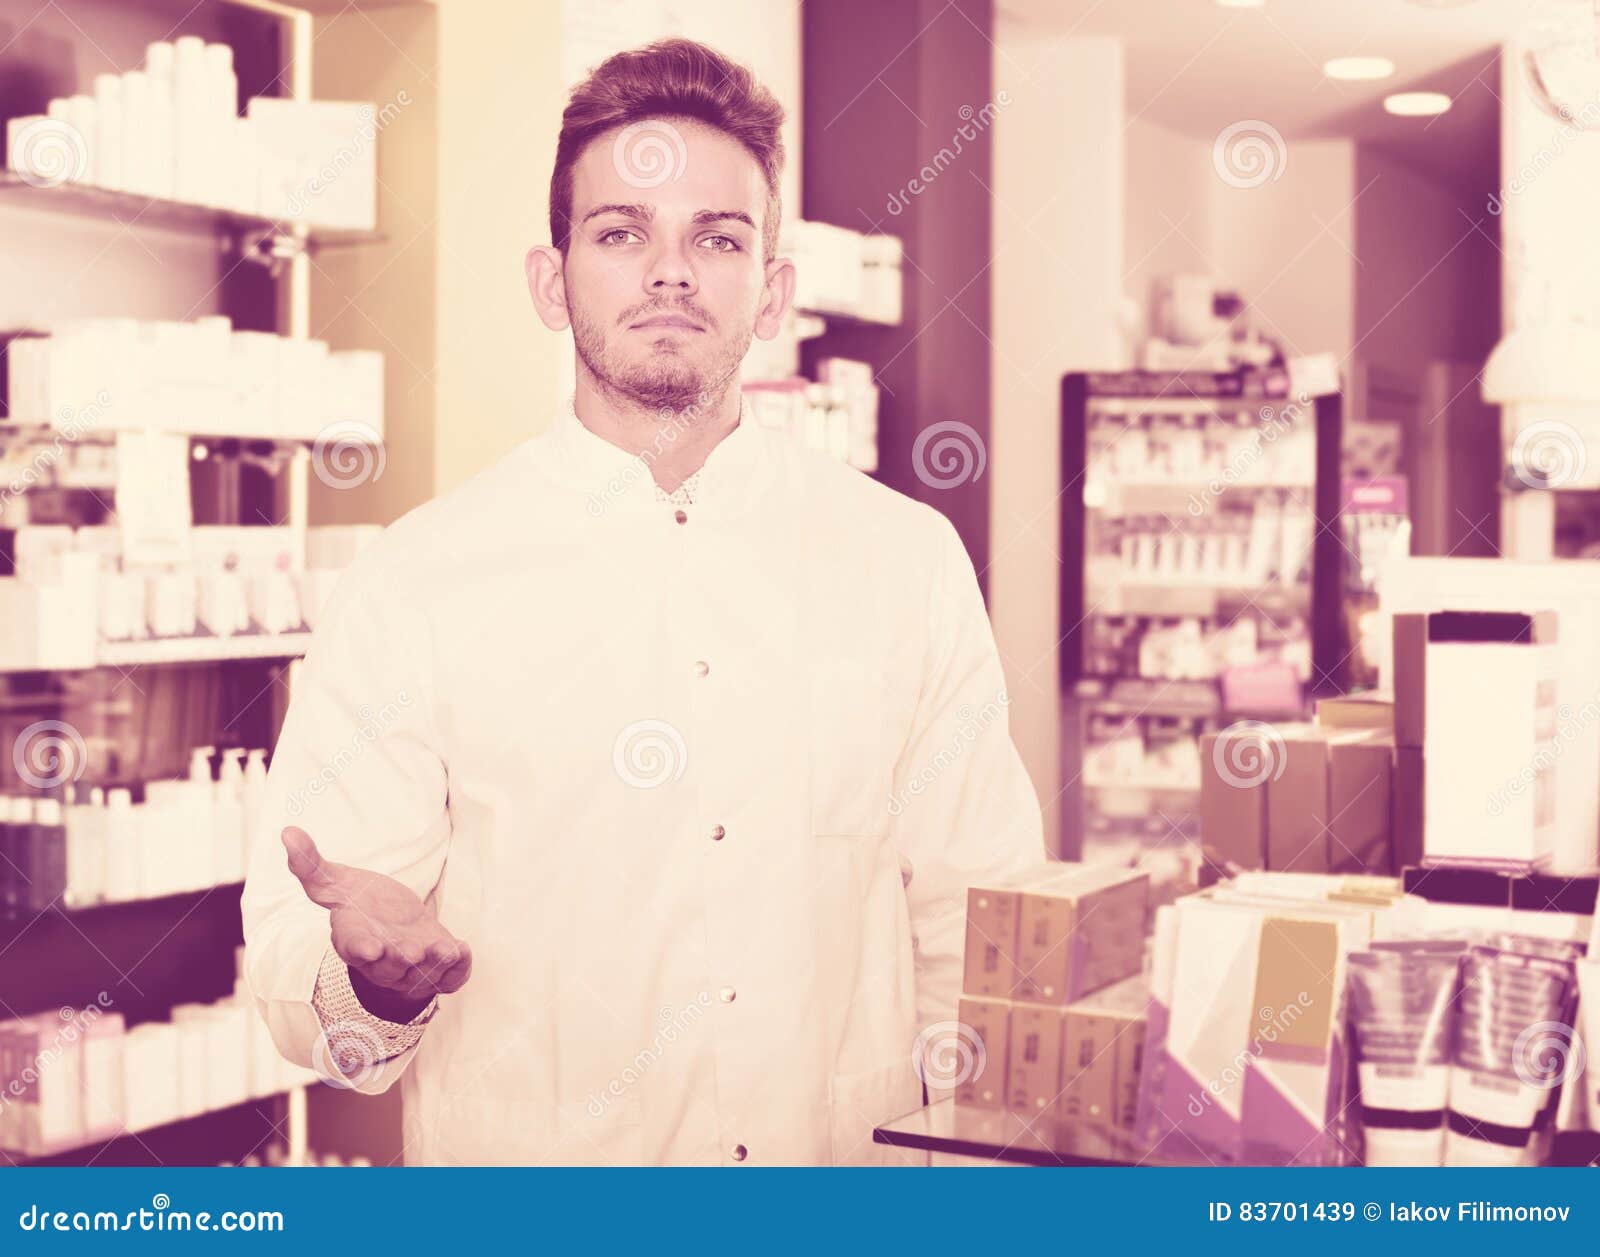 Male Pharmacist Wearing White Coat Standing in Drug Store Stock Image ...